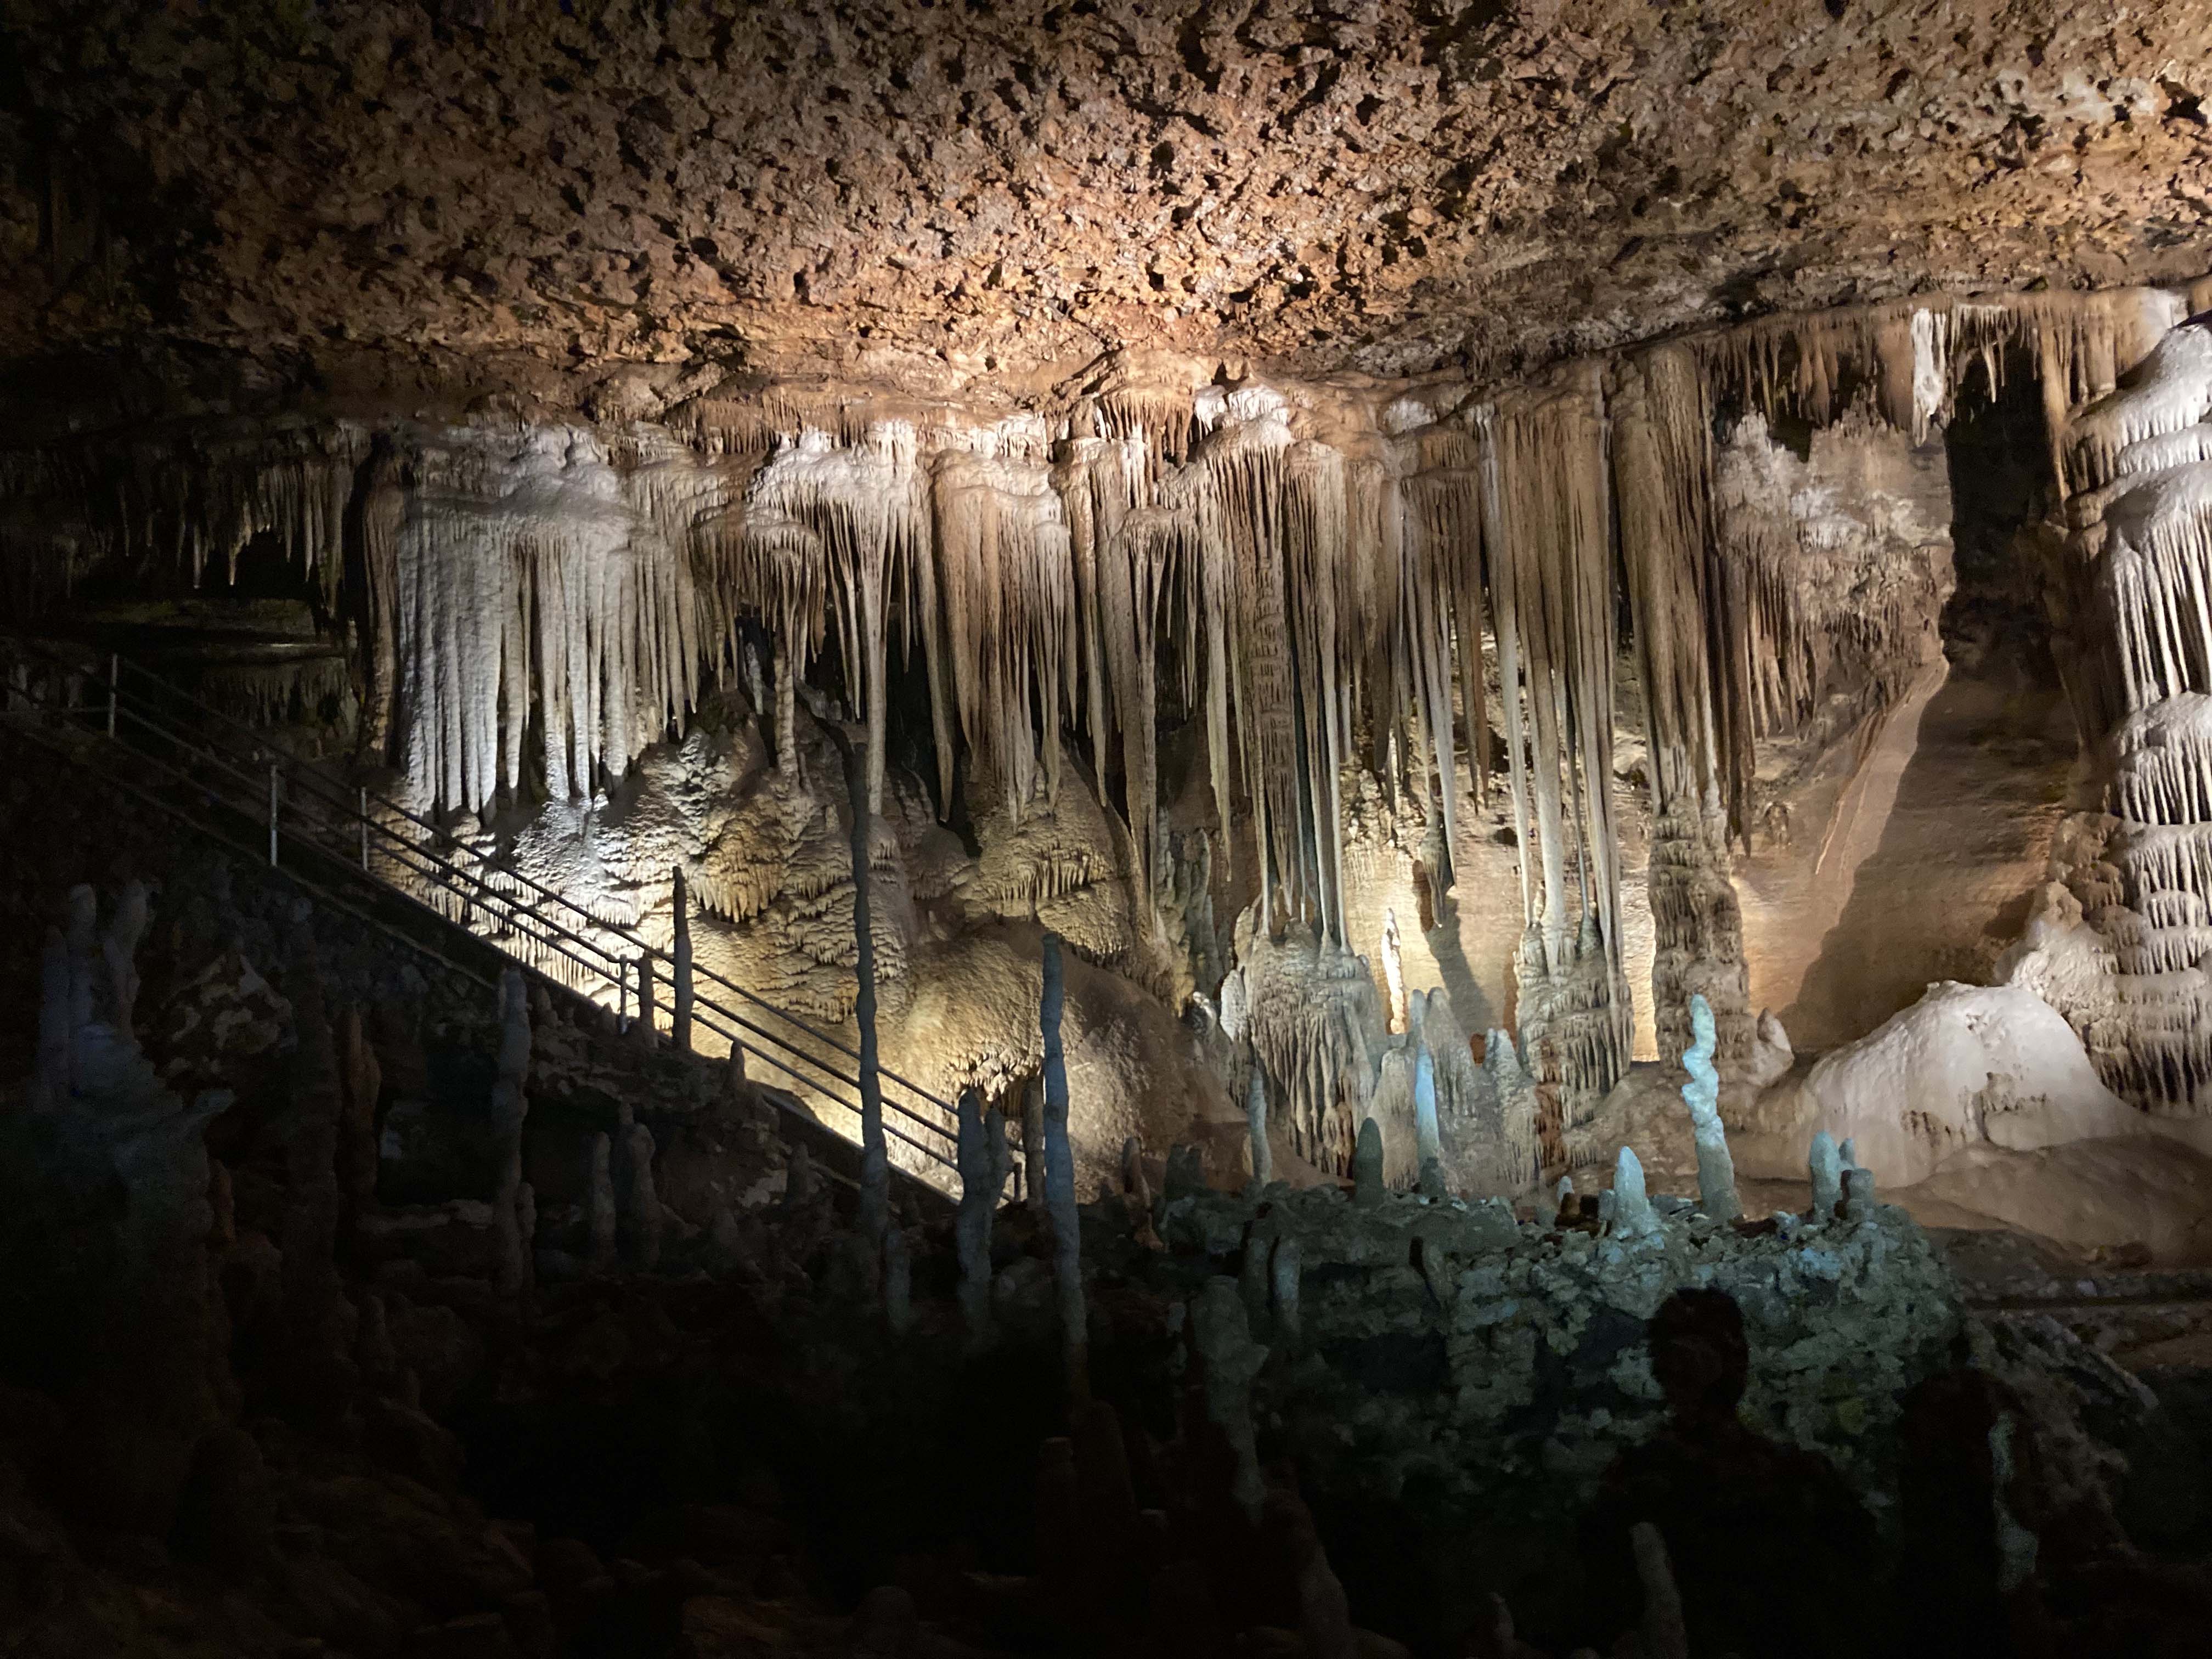 Scene inside Blanchard Springs Cavern's Dripstone Trail